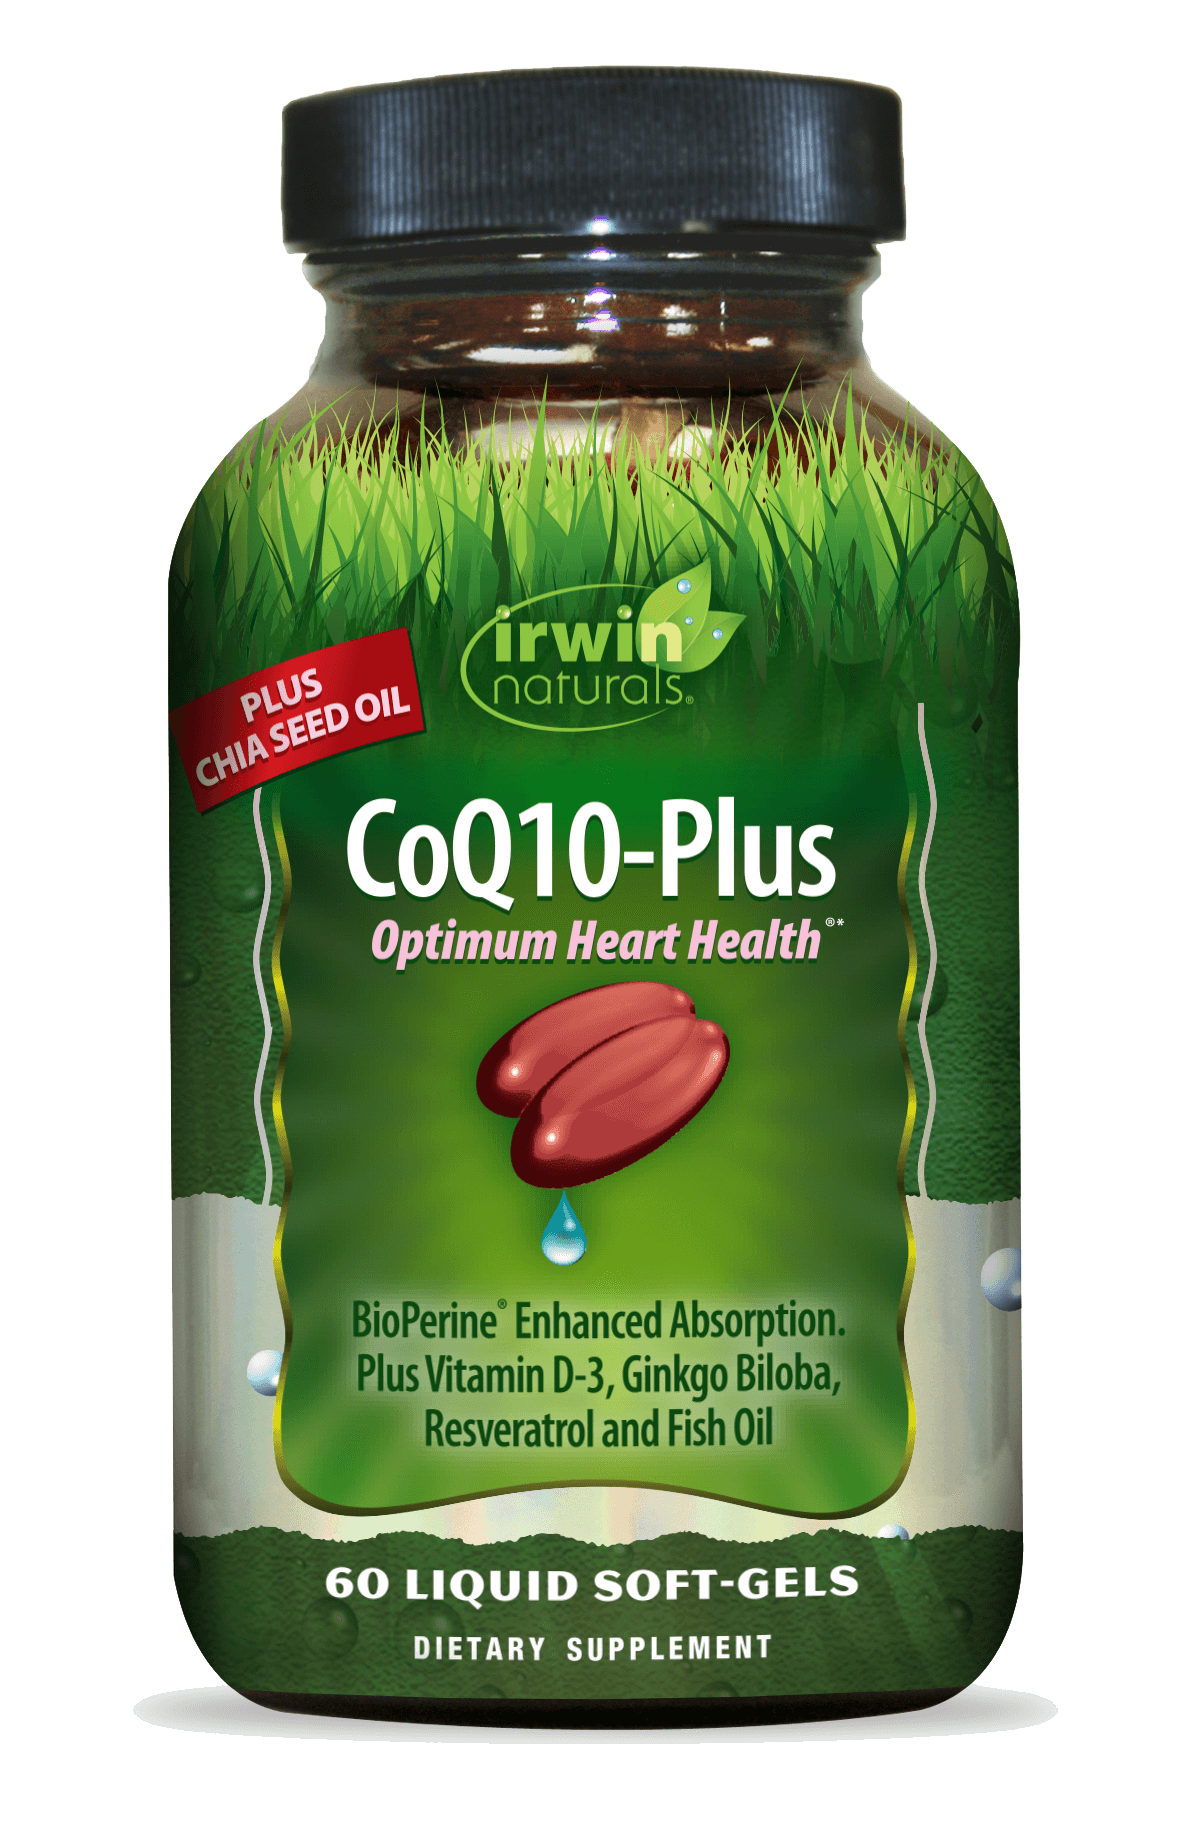 CoQ10 Plus Optimum Hearth Health Plus Chia Seed Oil by Irwin Naturals